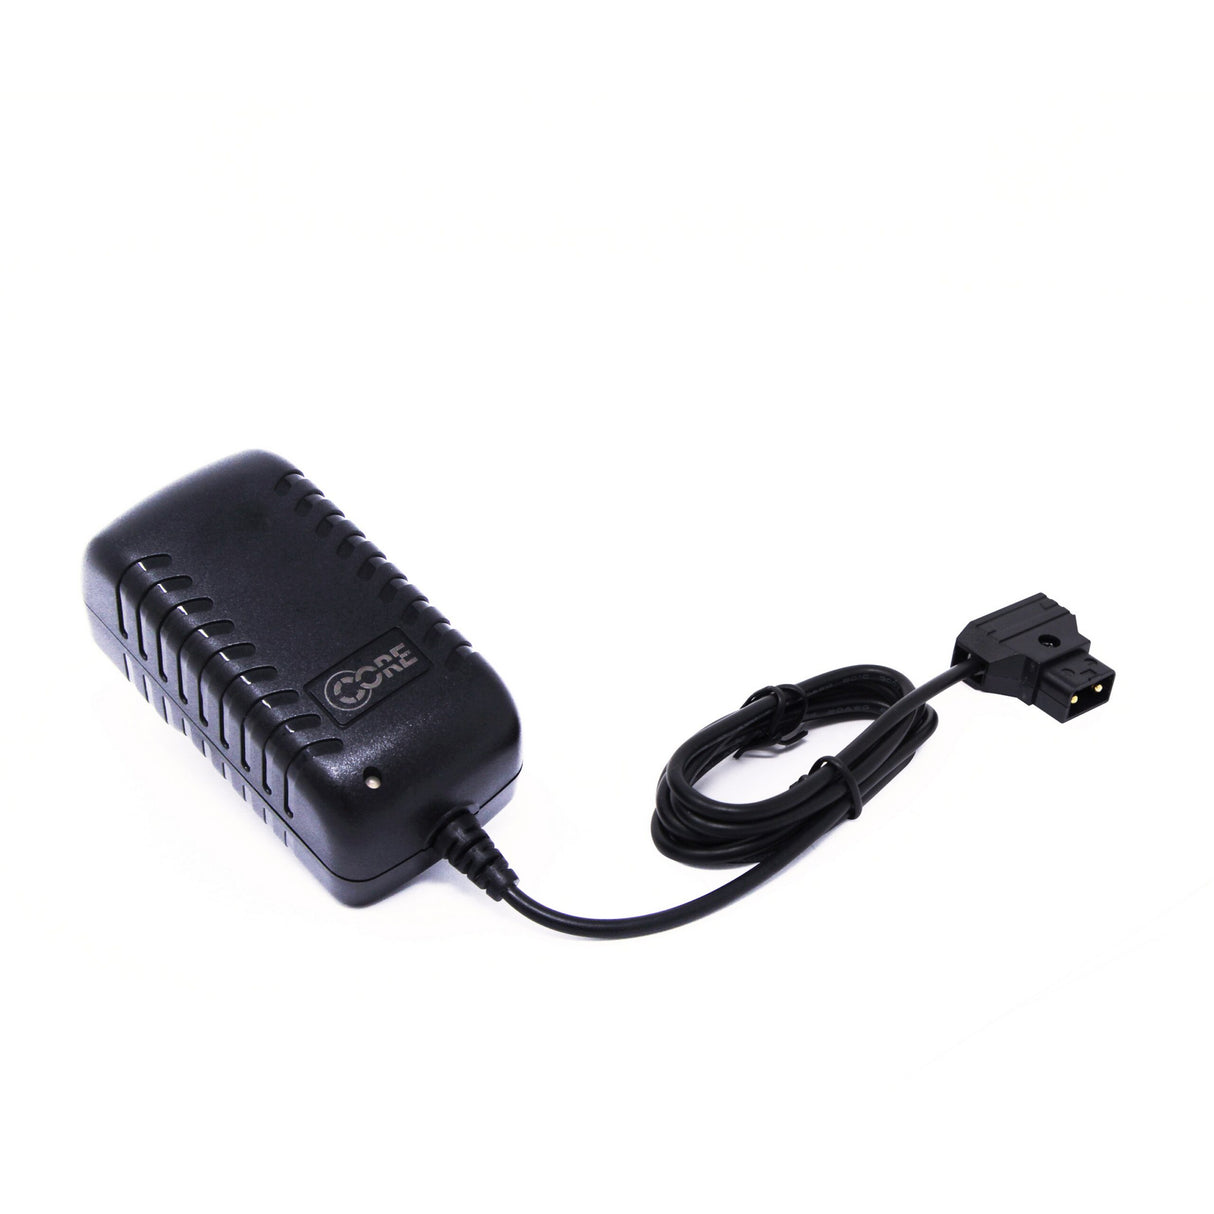 Core SWX PB70C15 1.5A Single Channel Powertap Charger